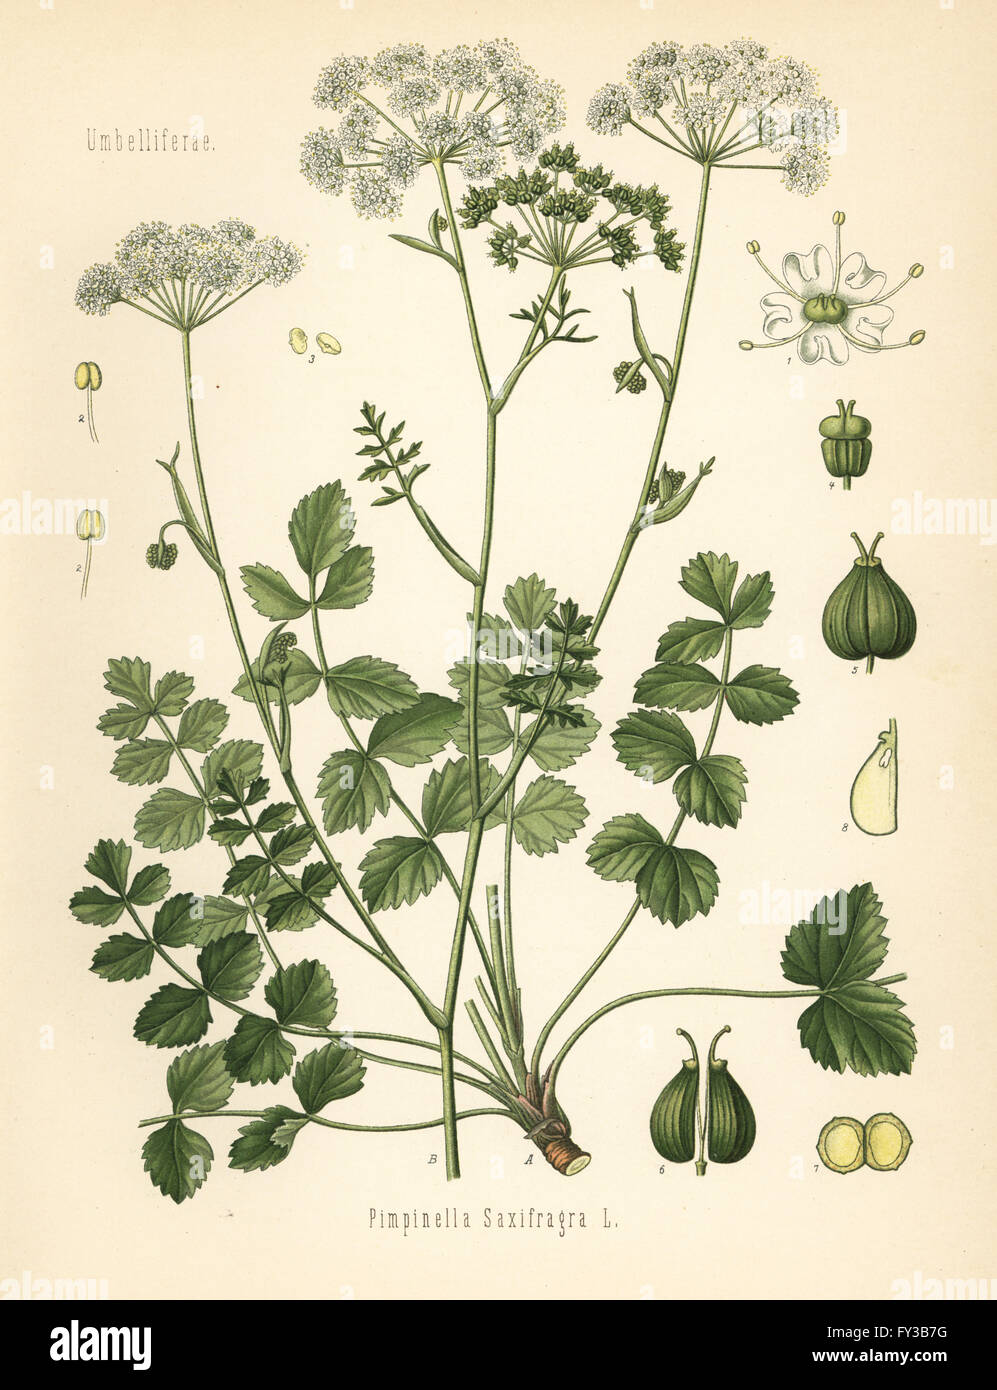 Burnet-saxifrage, Pimpinella saxifraga. Chromolithograph after a botanical illustration from Hermann Adolph Koehler's Medicinal Plants, edited by Gustav Pabst, Koehler, Germany, 1887. Stock Photo